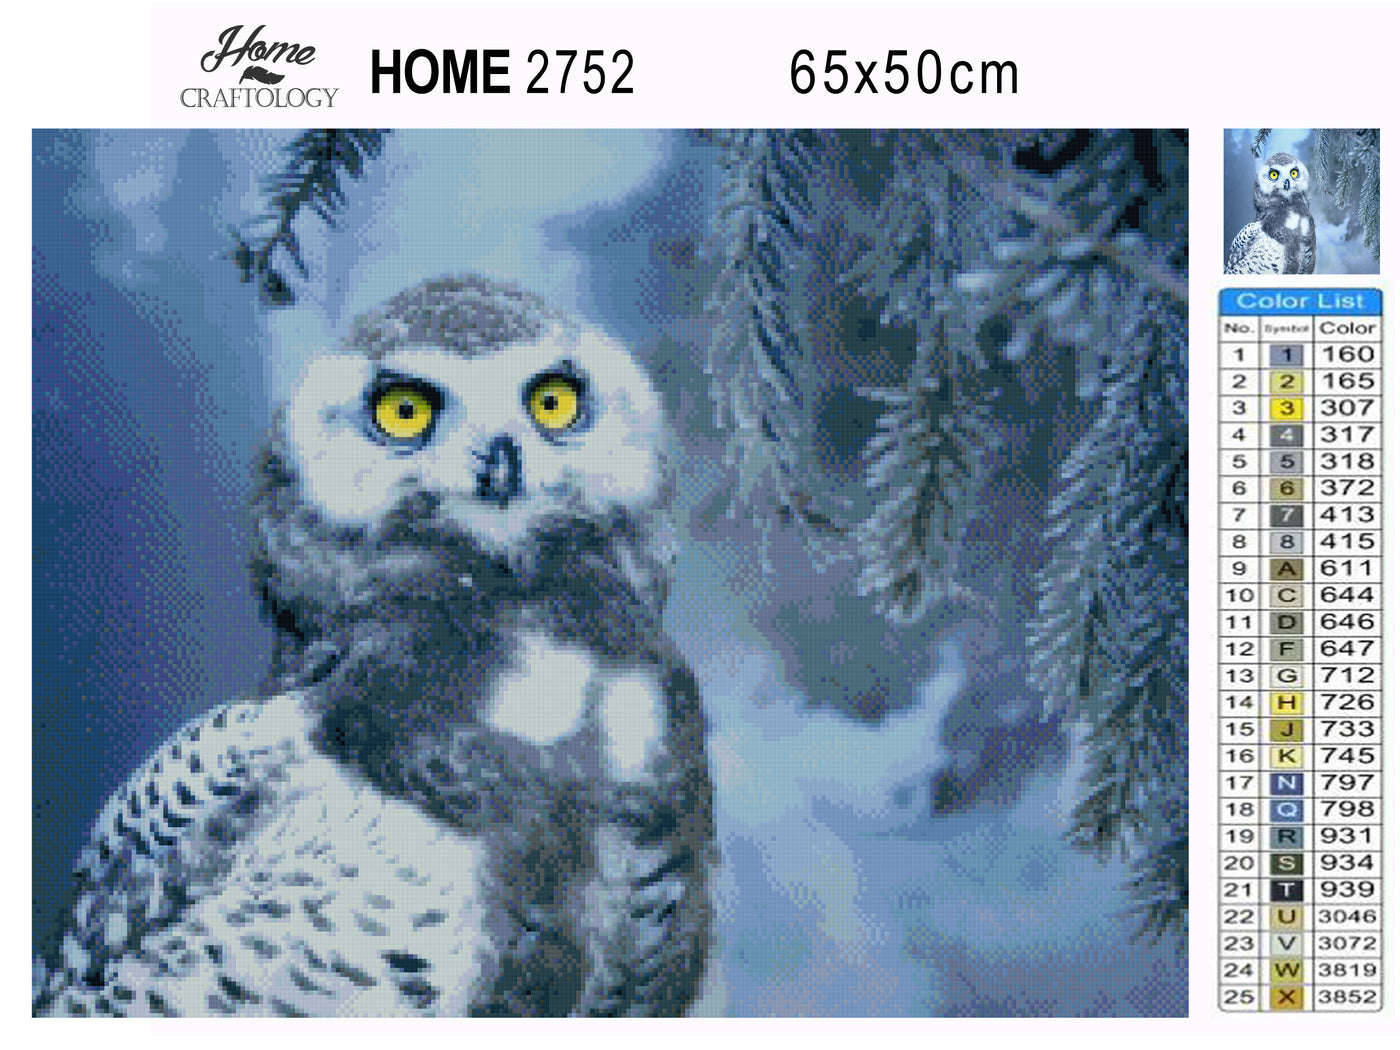 Owl with Yellow Eyes - Premium Diamond Painting Kit